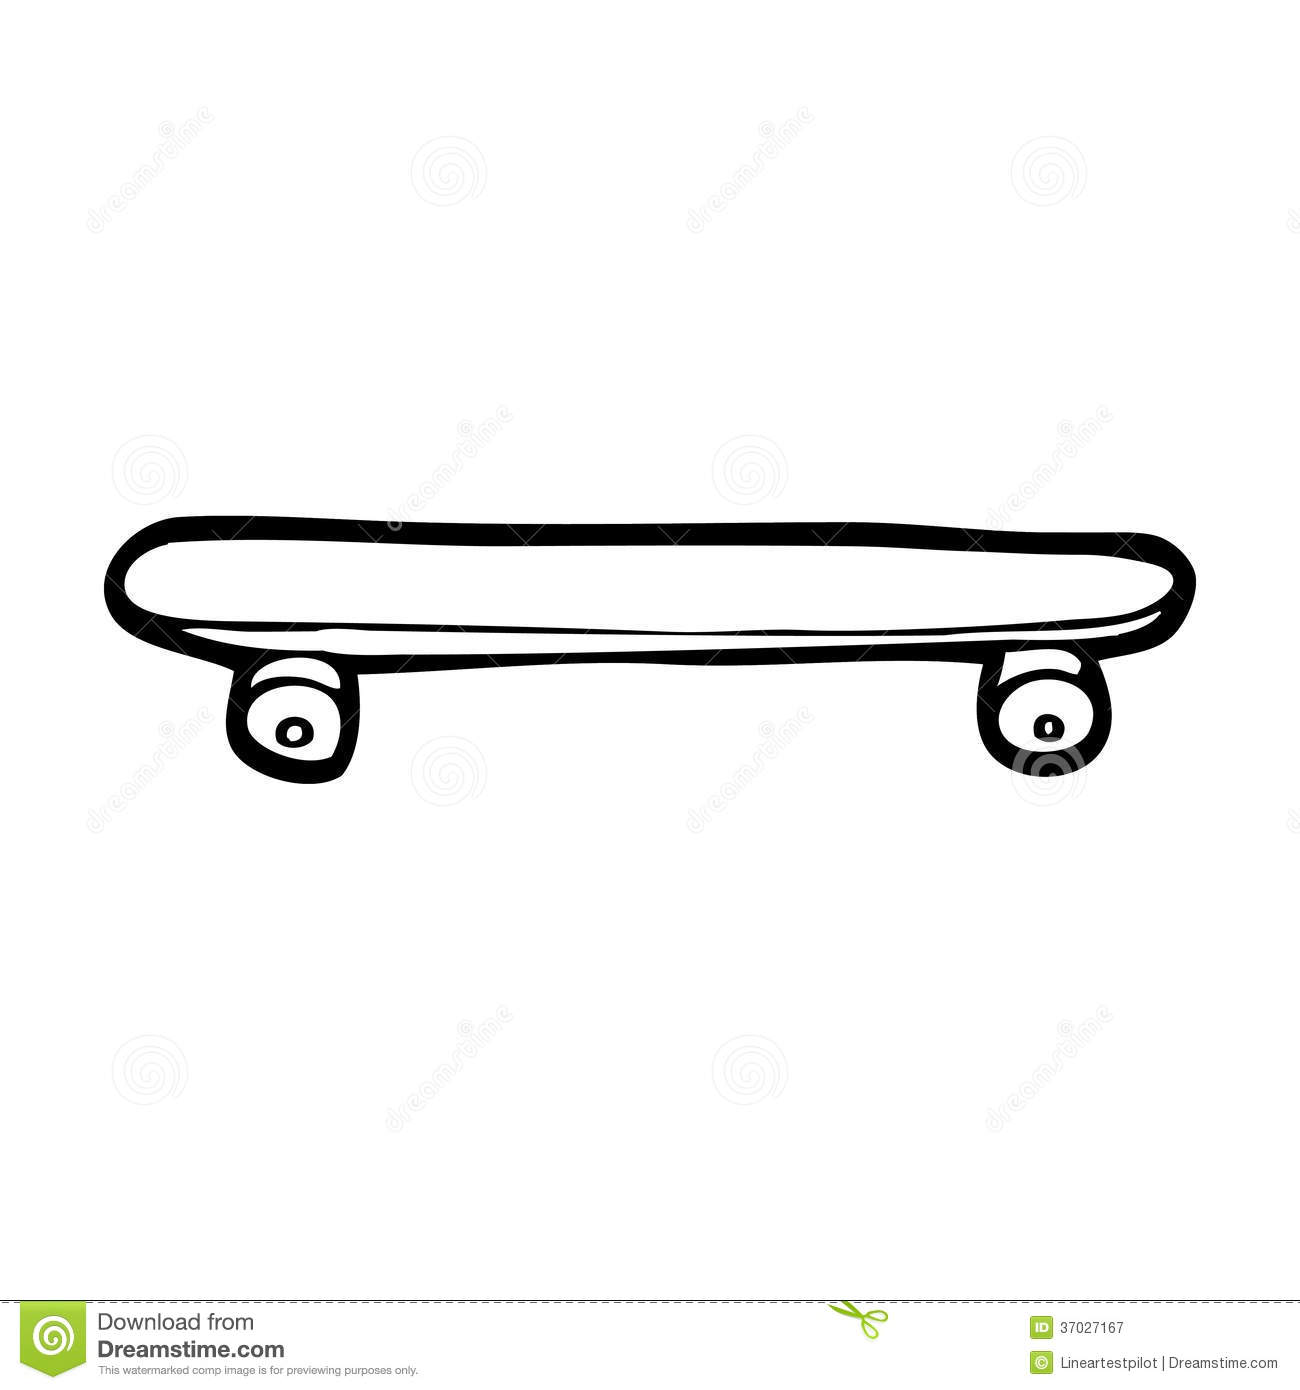 Cartoon Skateboard Royalty Free Stock Photography   Image  37027167